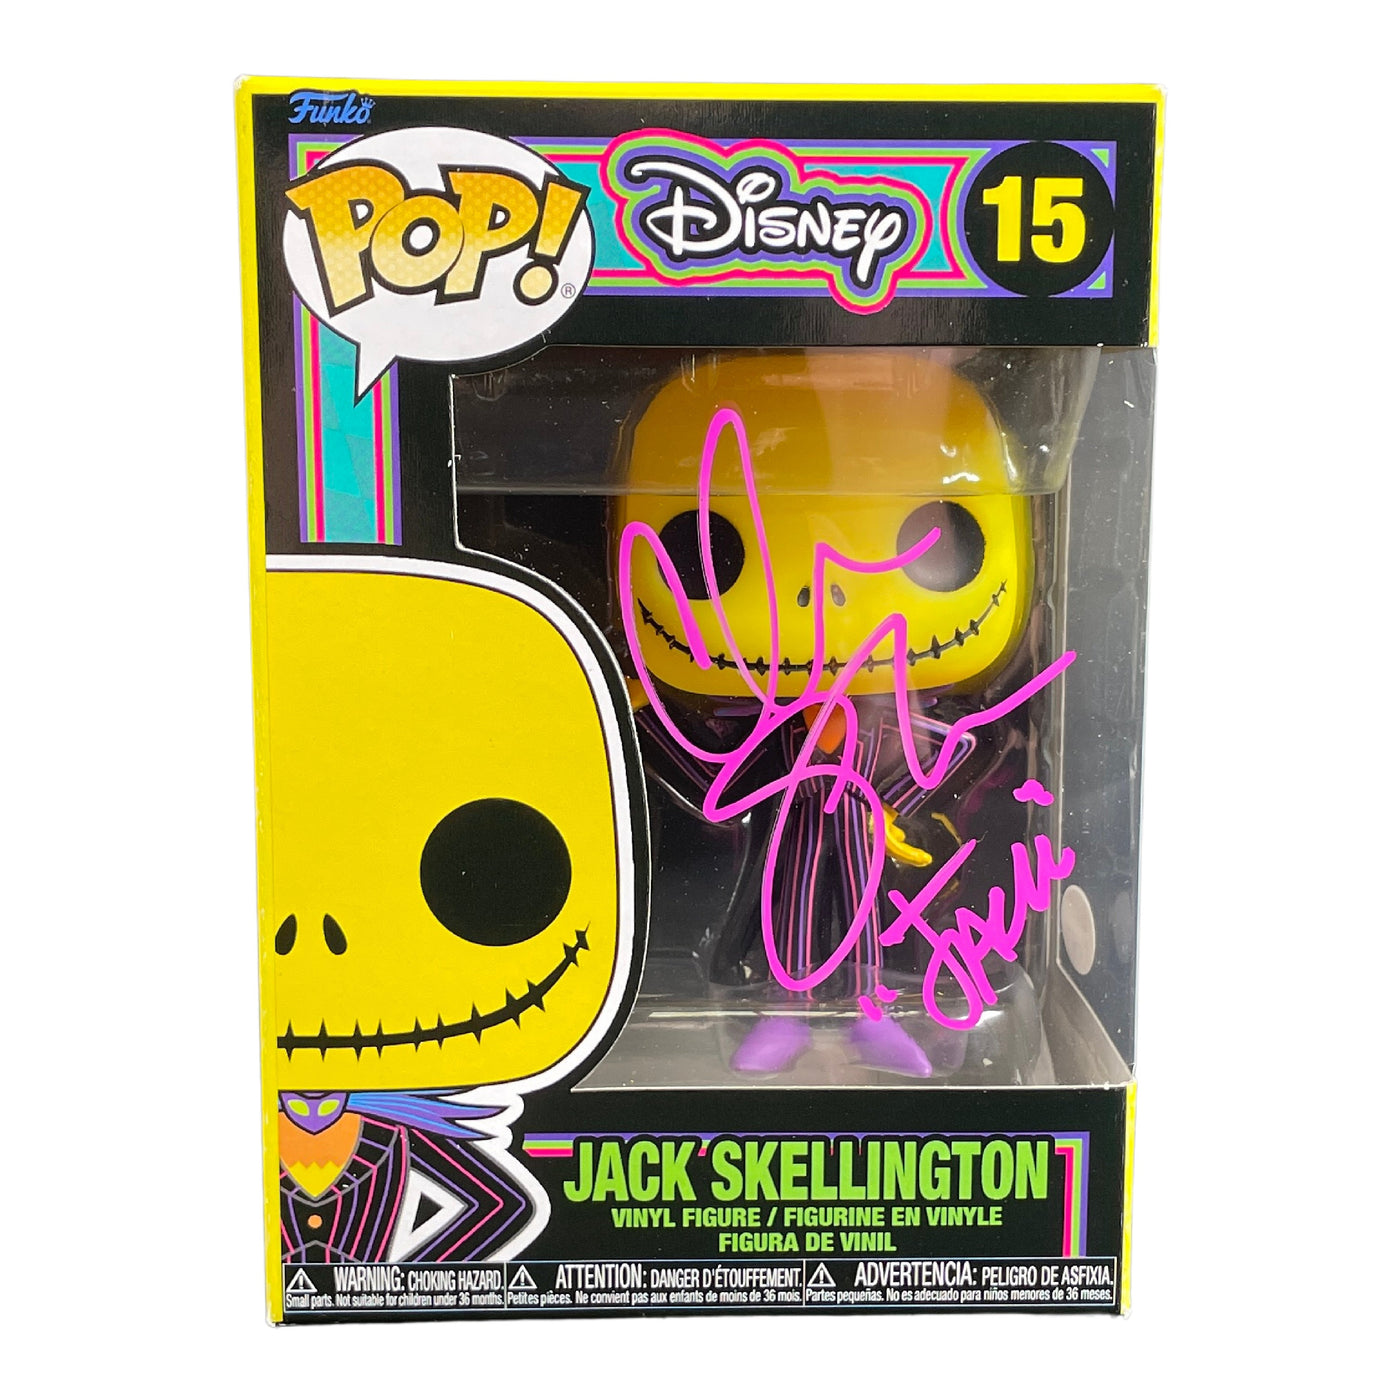 SPECIAL Chris Sarandon Signed Funko POP Disney BL Jack Skellington Autographed JSA COA